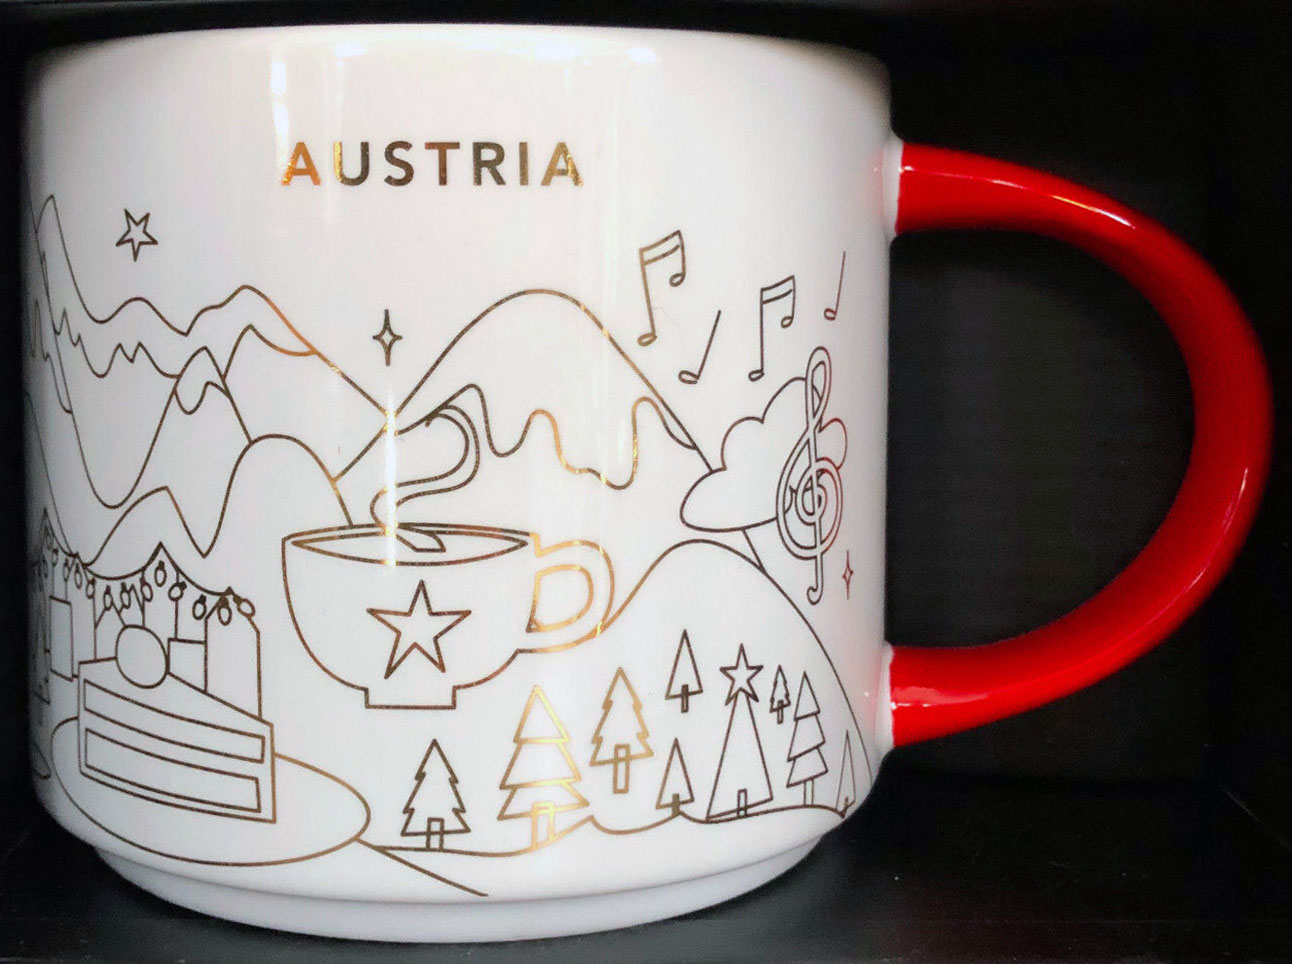 https://starbucks-mugs.com/wp-content/uploads/2018/11/yahc_austria.jpg